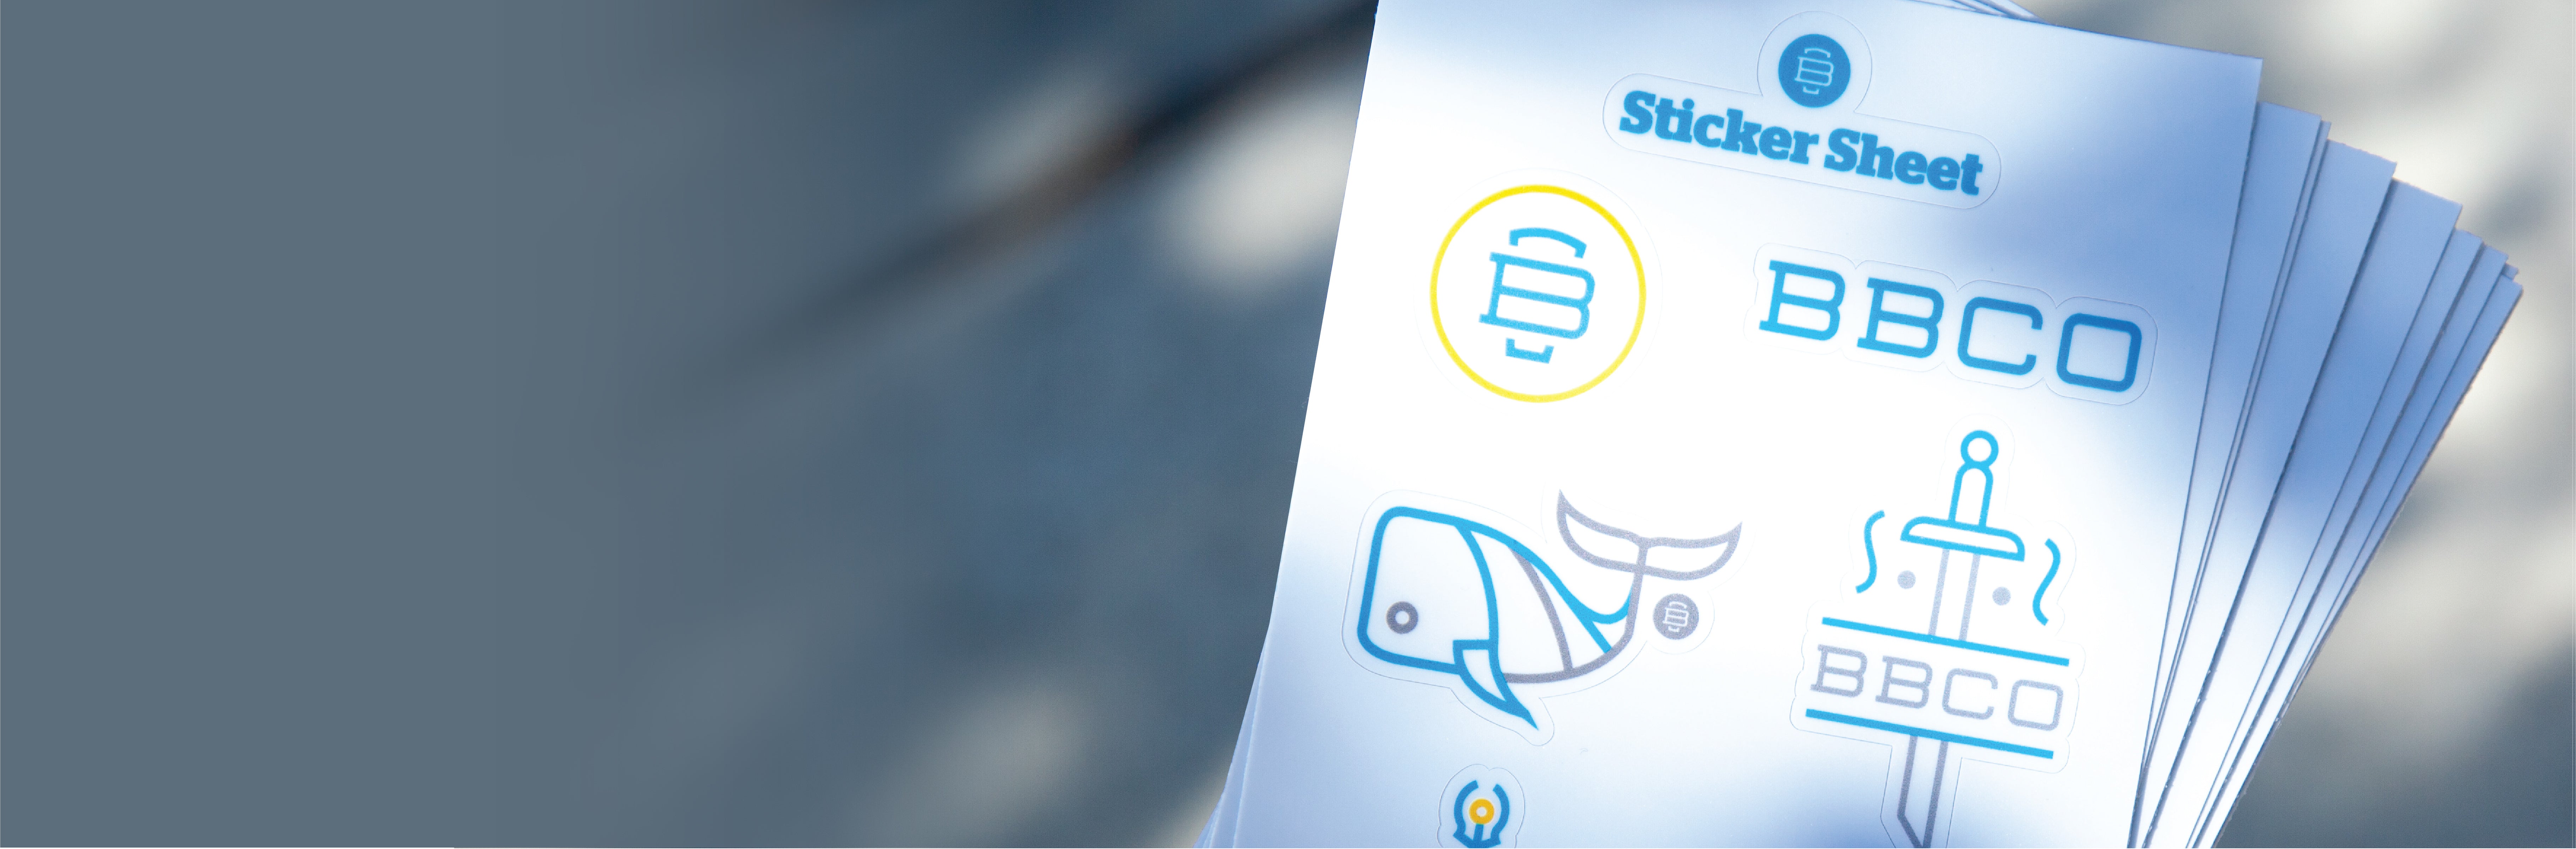 Sticky Brand Custom Sticker Sheets BBCO Banner Whale Scandinavian Design